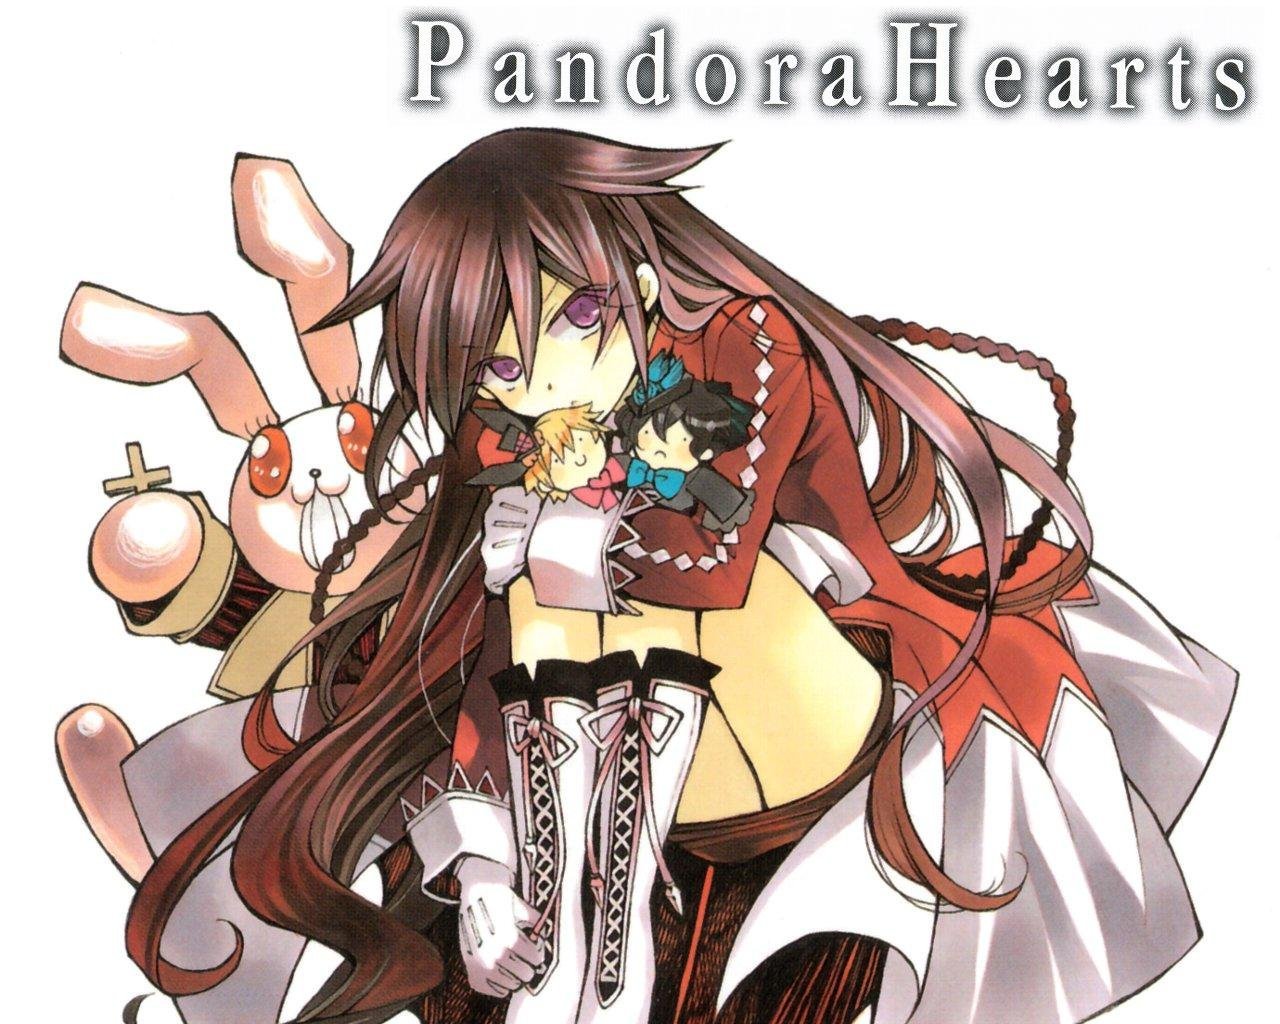 Pandora Hearts 潘朵拉之心 高清壁纸12 - 1920x1080 壁纸下载 - Pandora Hearts 潘朵拉之心 高清壁纸 - 动漫壁纸 - V3壁纸站